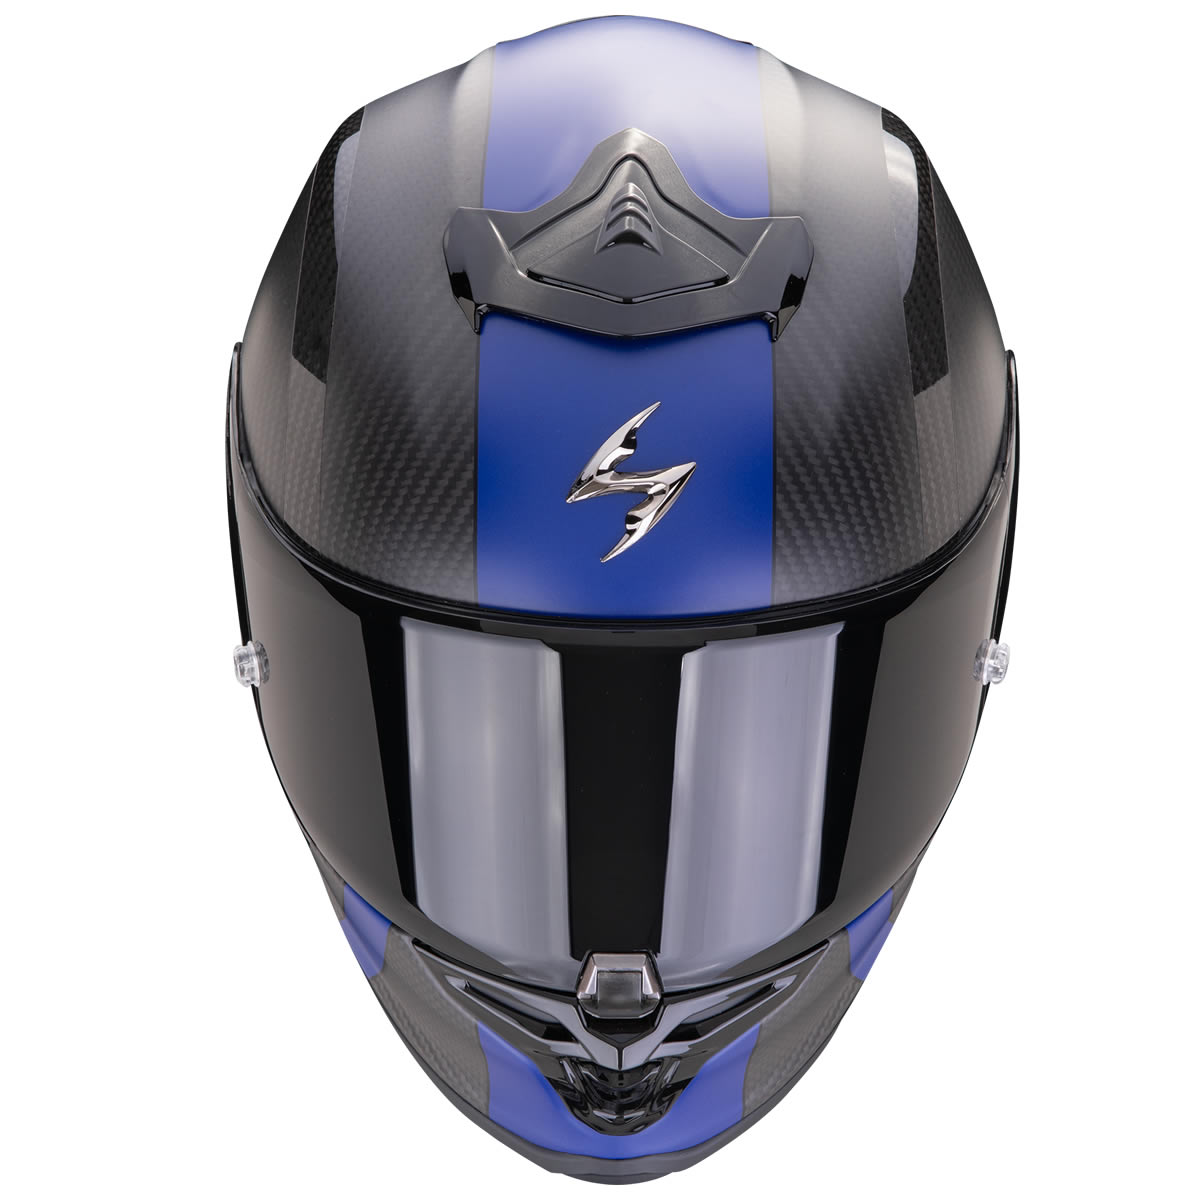 Scorpion EXO-R1 EVO Carbon Air MG Helm, schwarz-blau matt